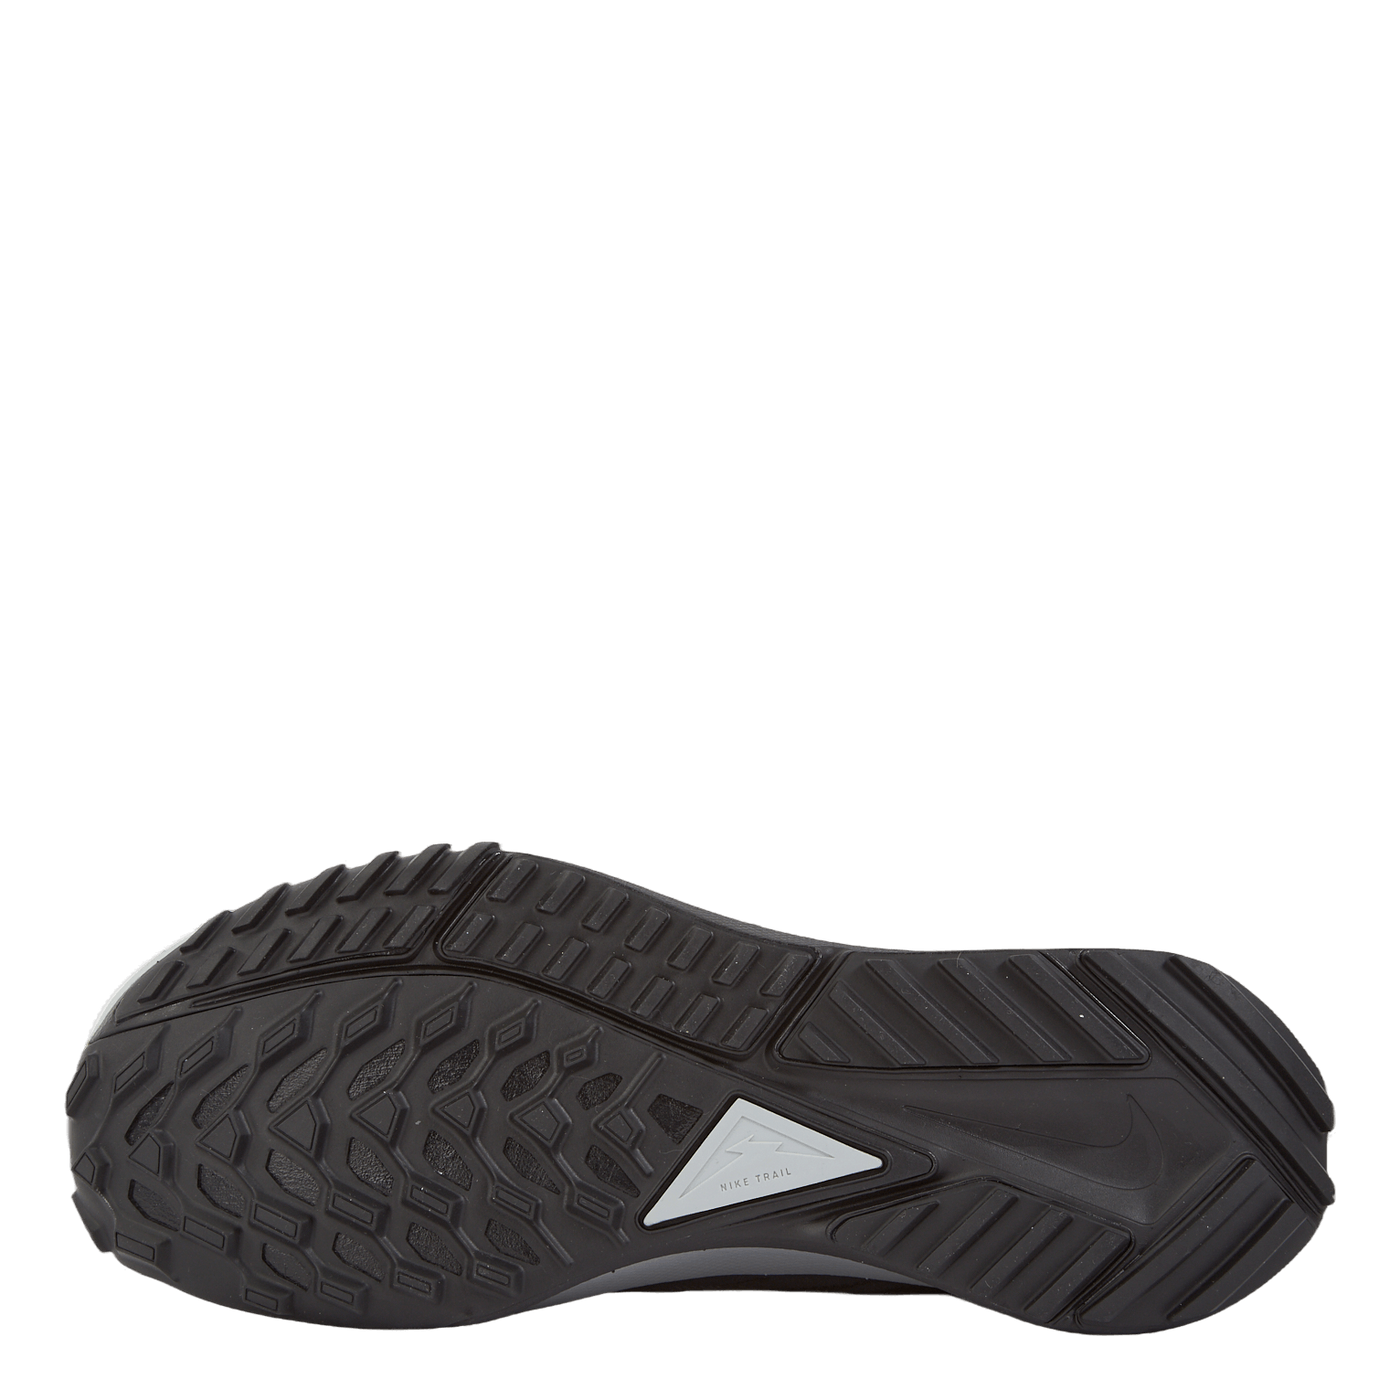 React Pegasus Trail 4 GORE-TEX Men's Waterproof Trail Running Shoes BLACK/WOLF GREY-REFLECT SILVER